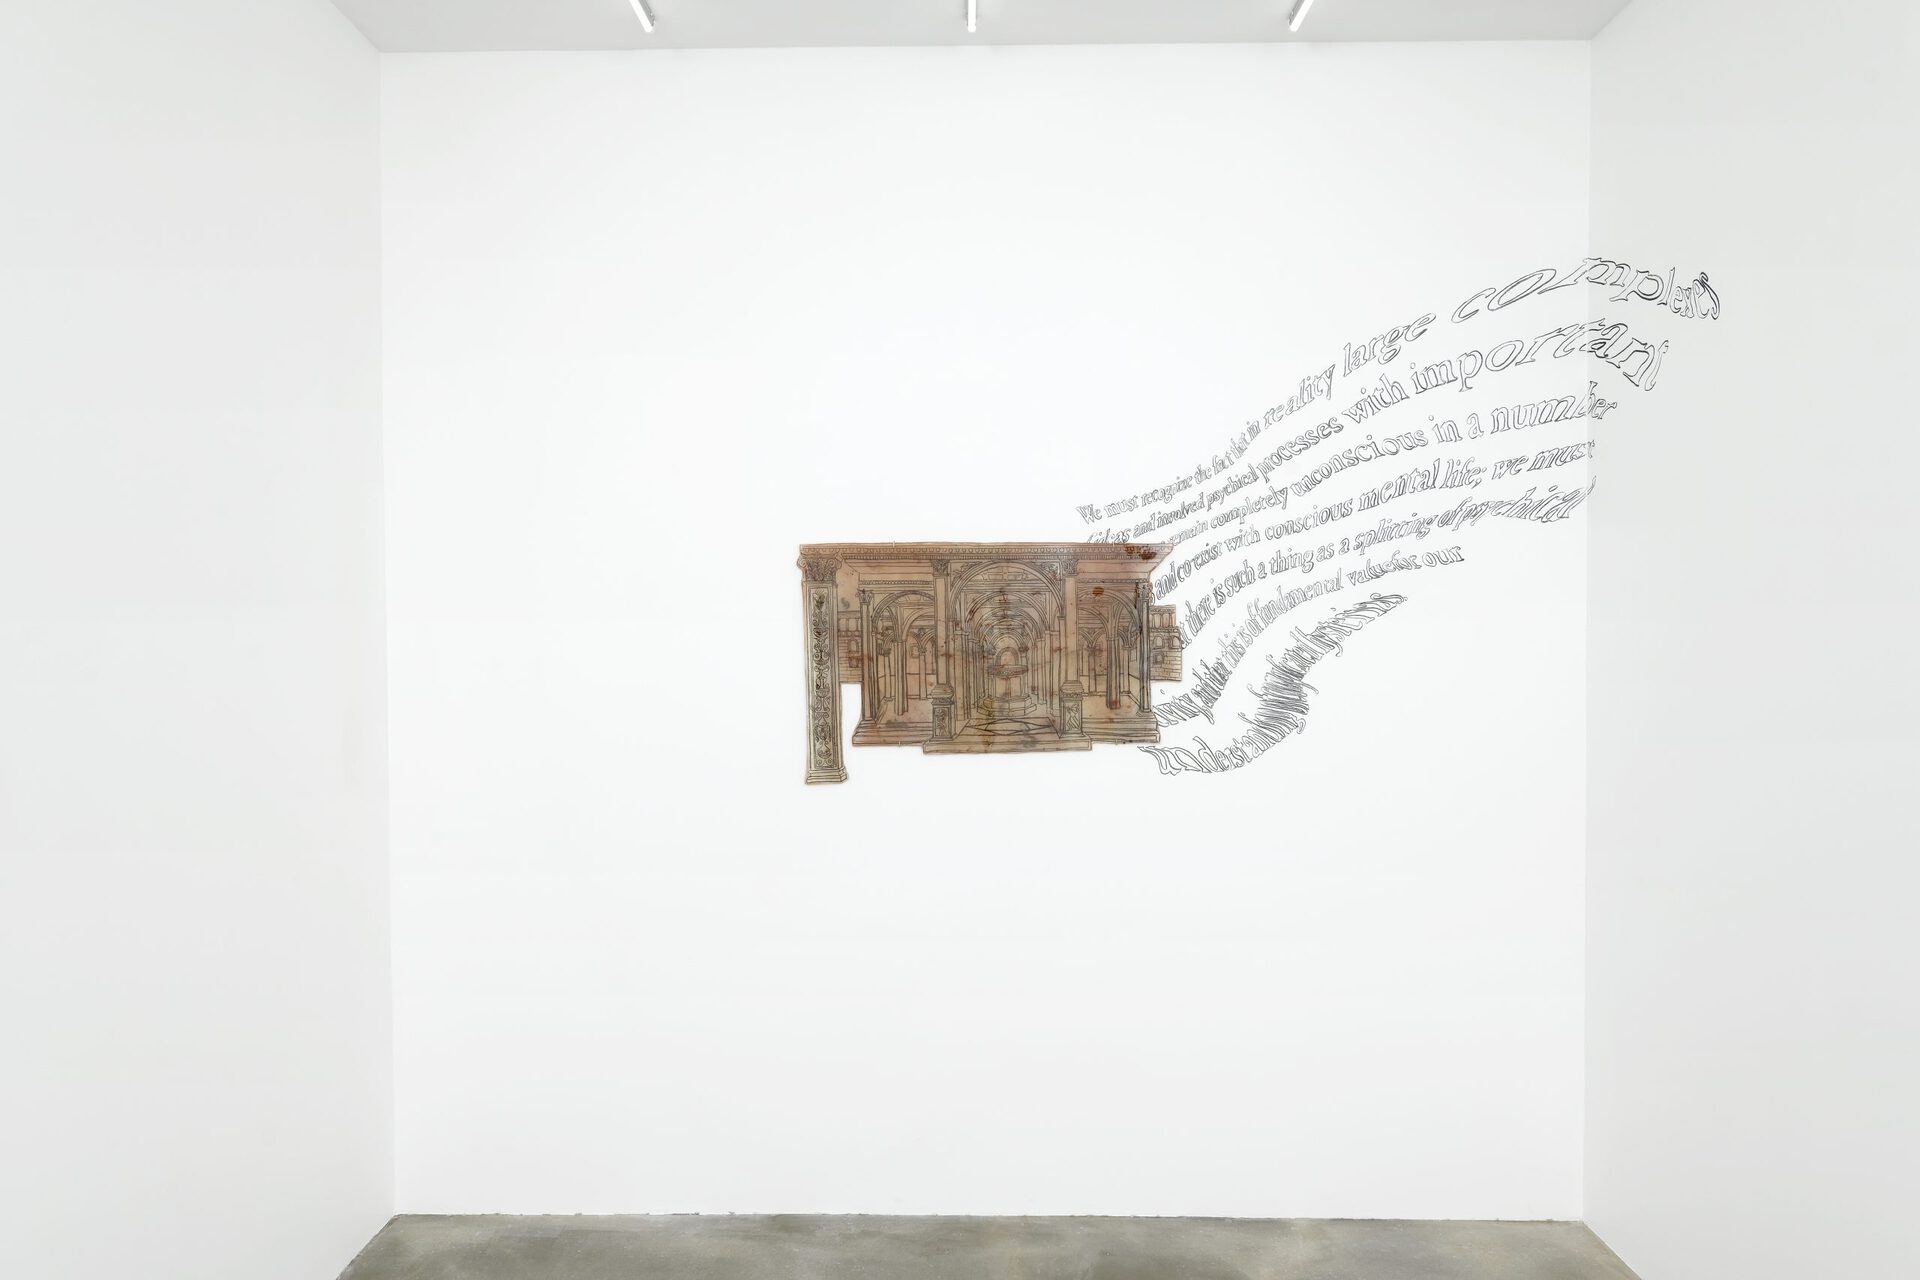 Zuzanna Czebatul, Domenico, 2020, resin, handcrafted paper, coal, pigments, 63 x 100 cm